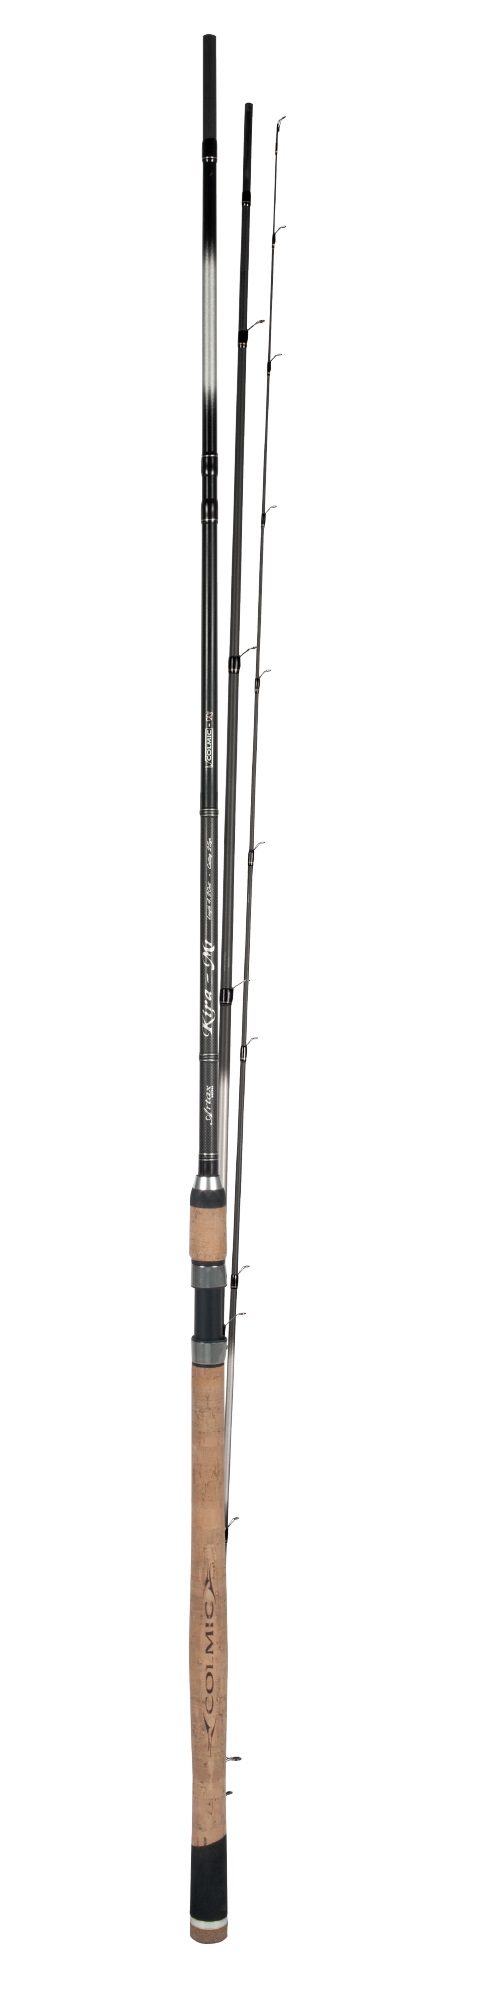 Colmic Kira M1 Match Rod 4.20m (25g) (3-pieces)